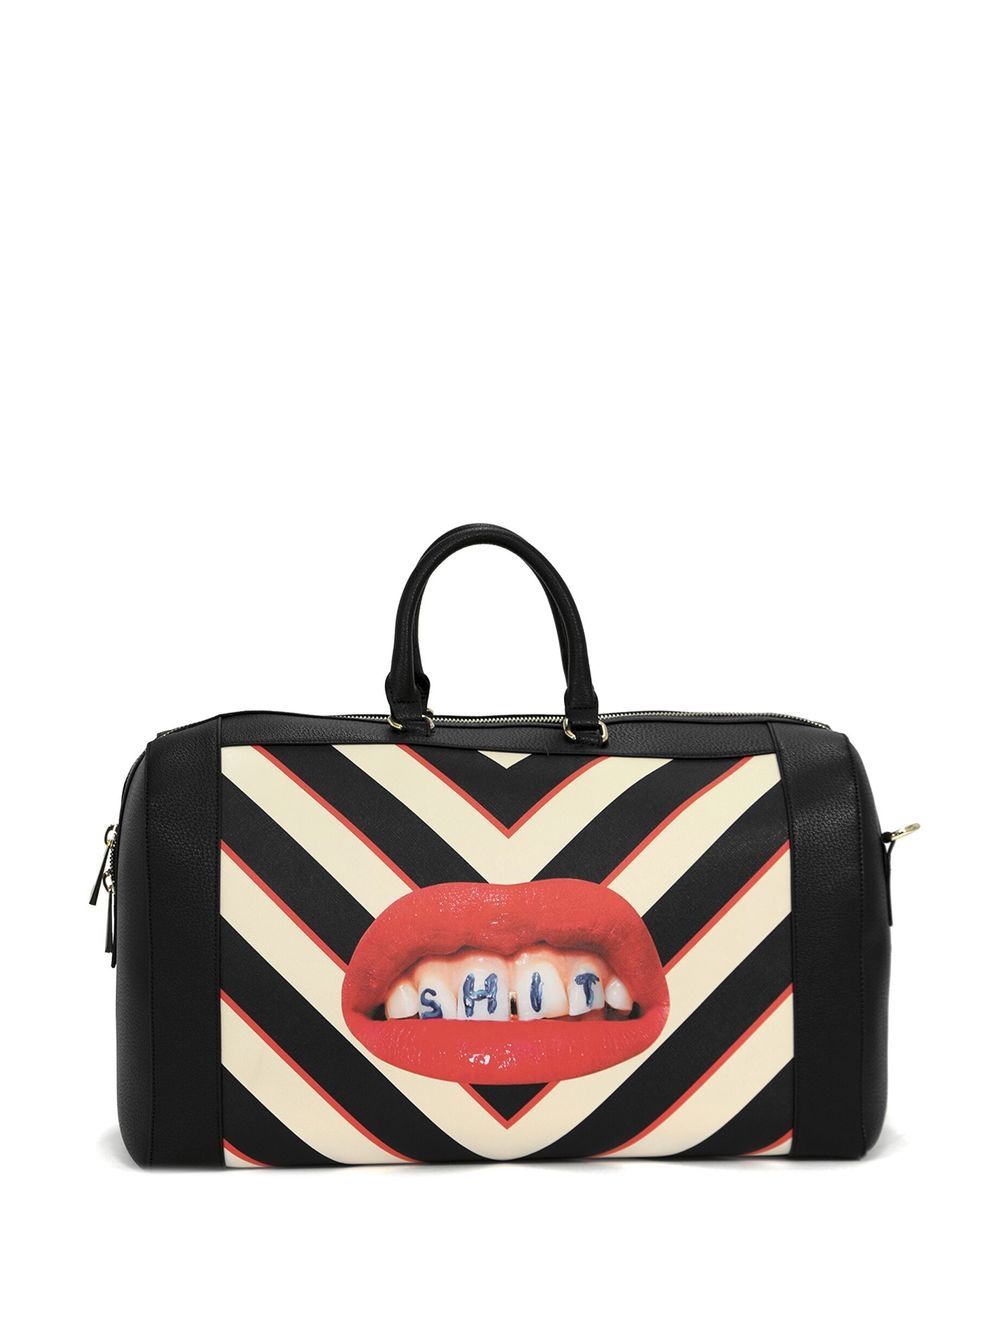 Travel Bag Black Lipstick - TOILETPAPER SHOP